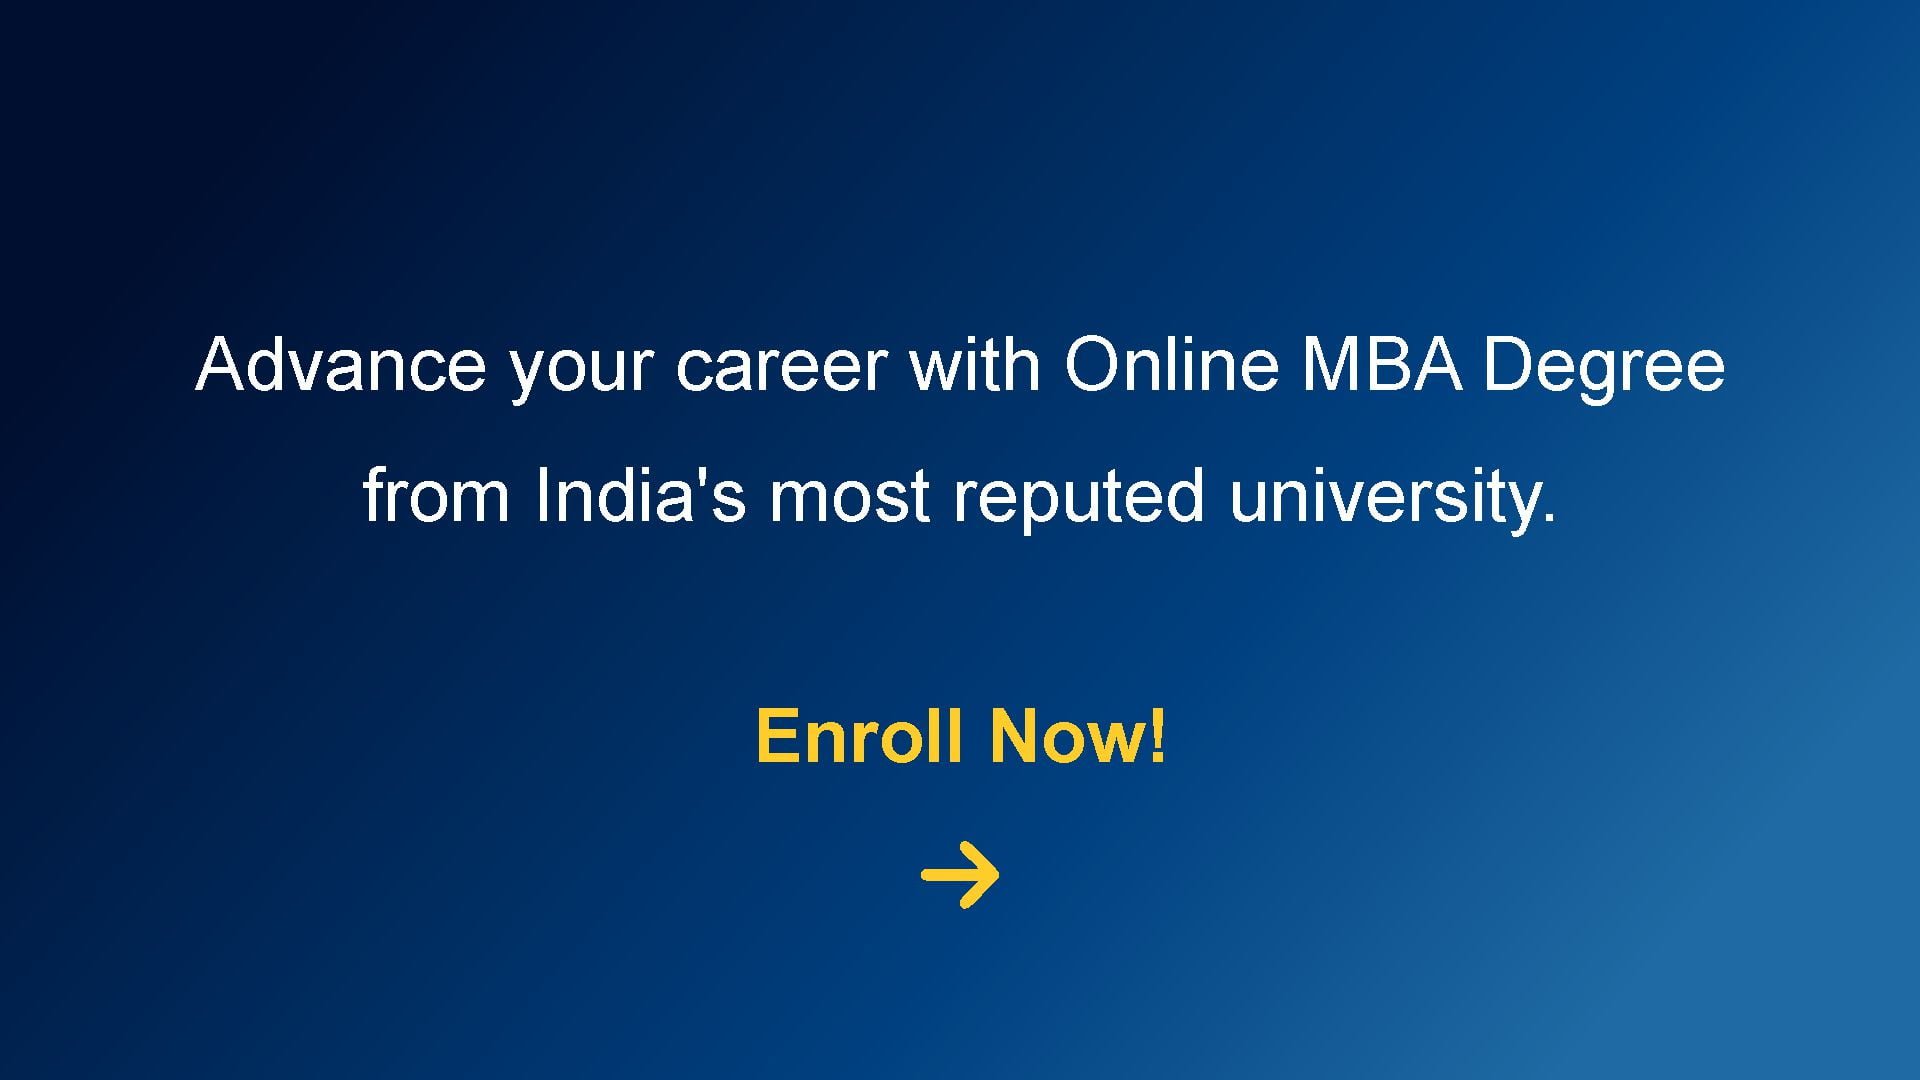 BVDU - Online MBA Program